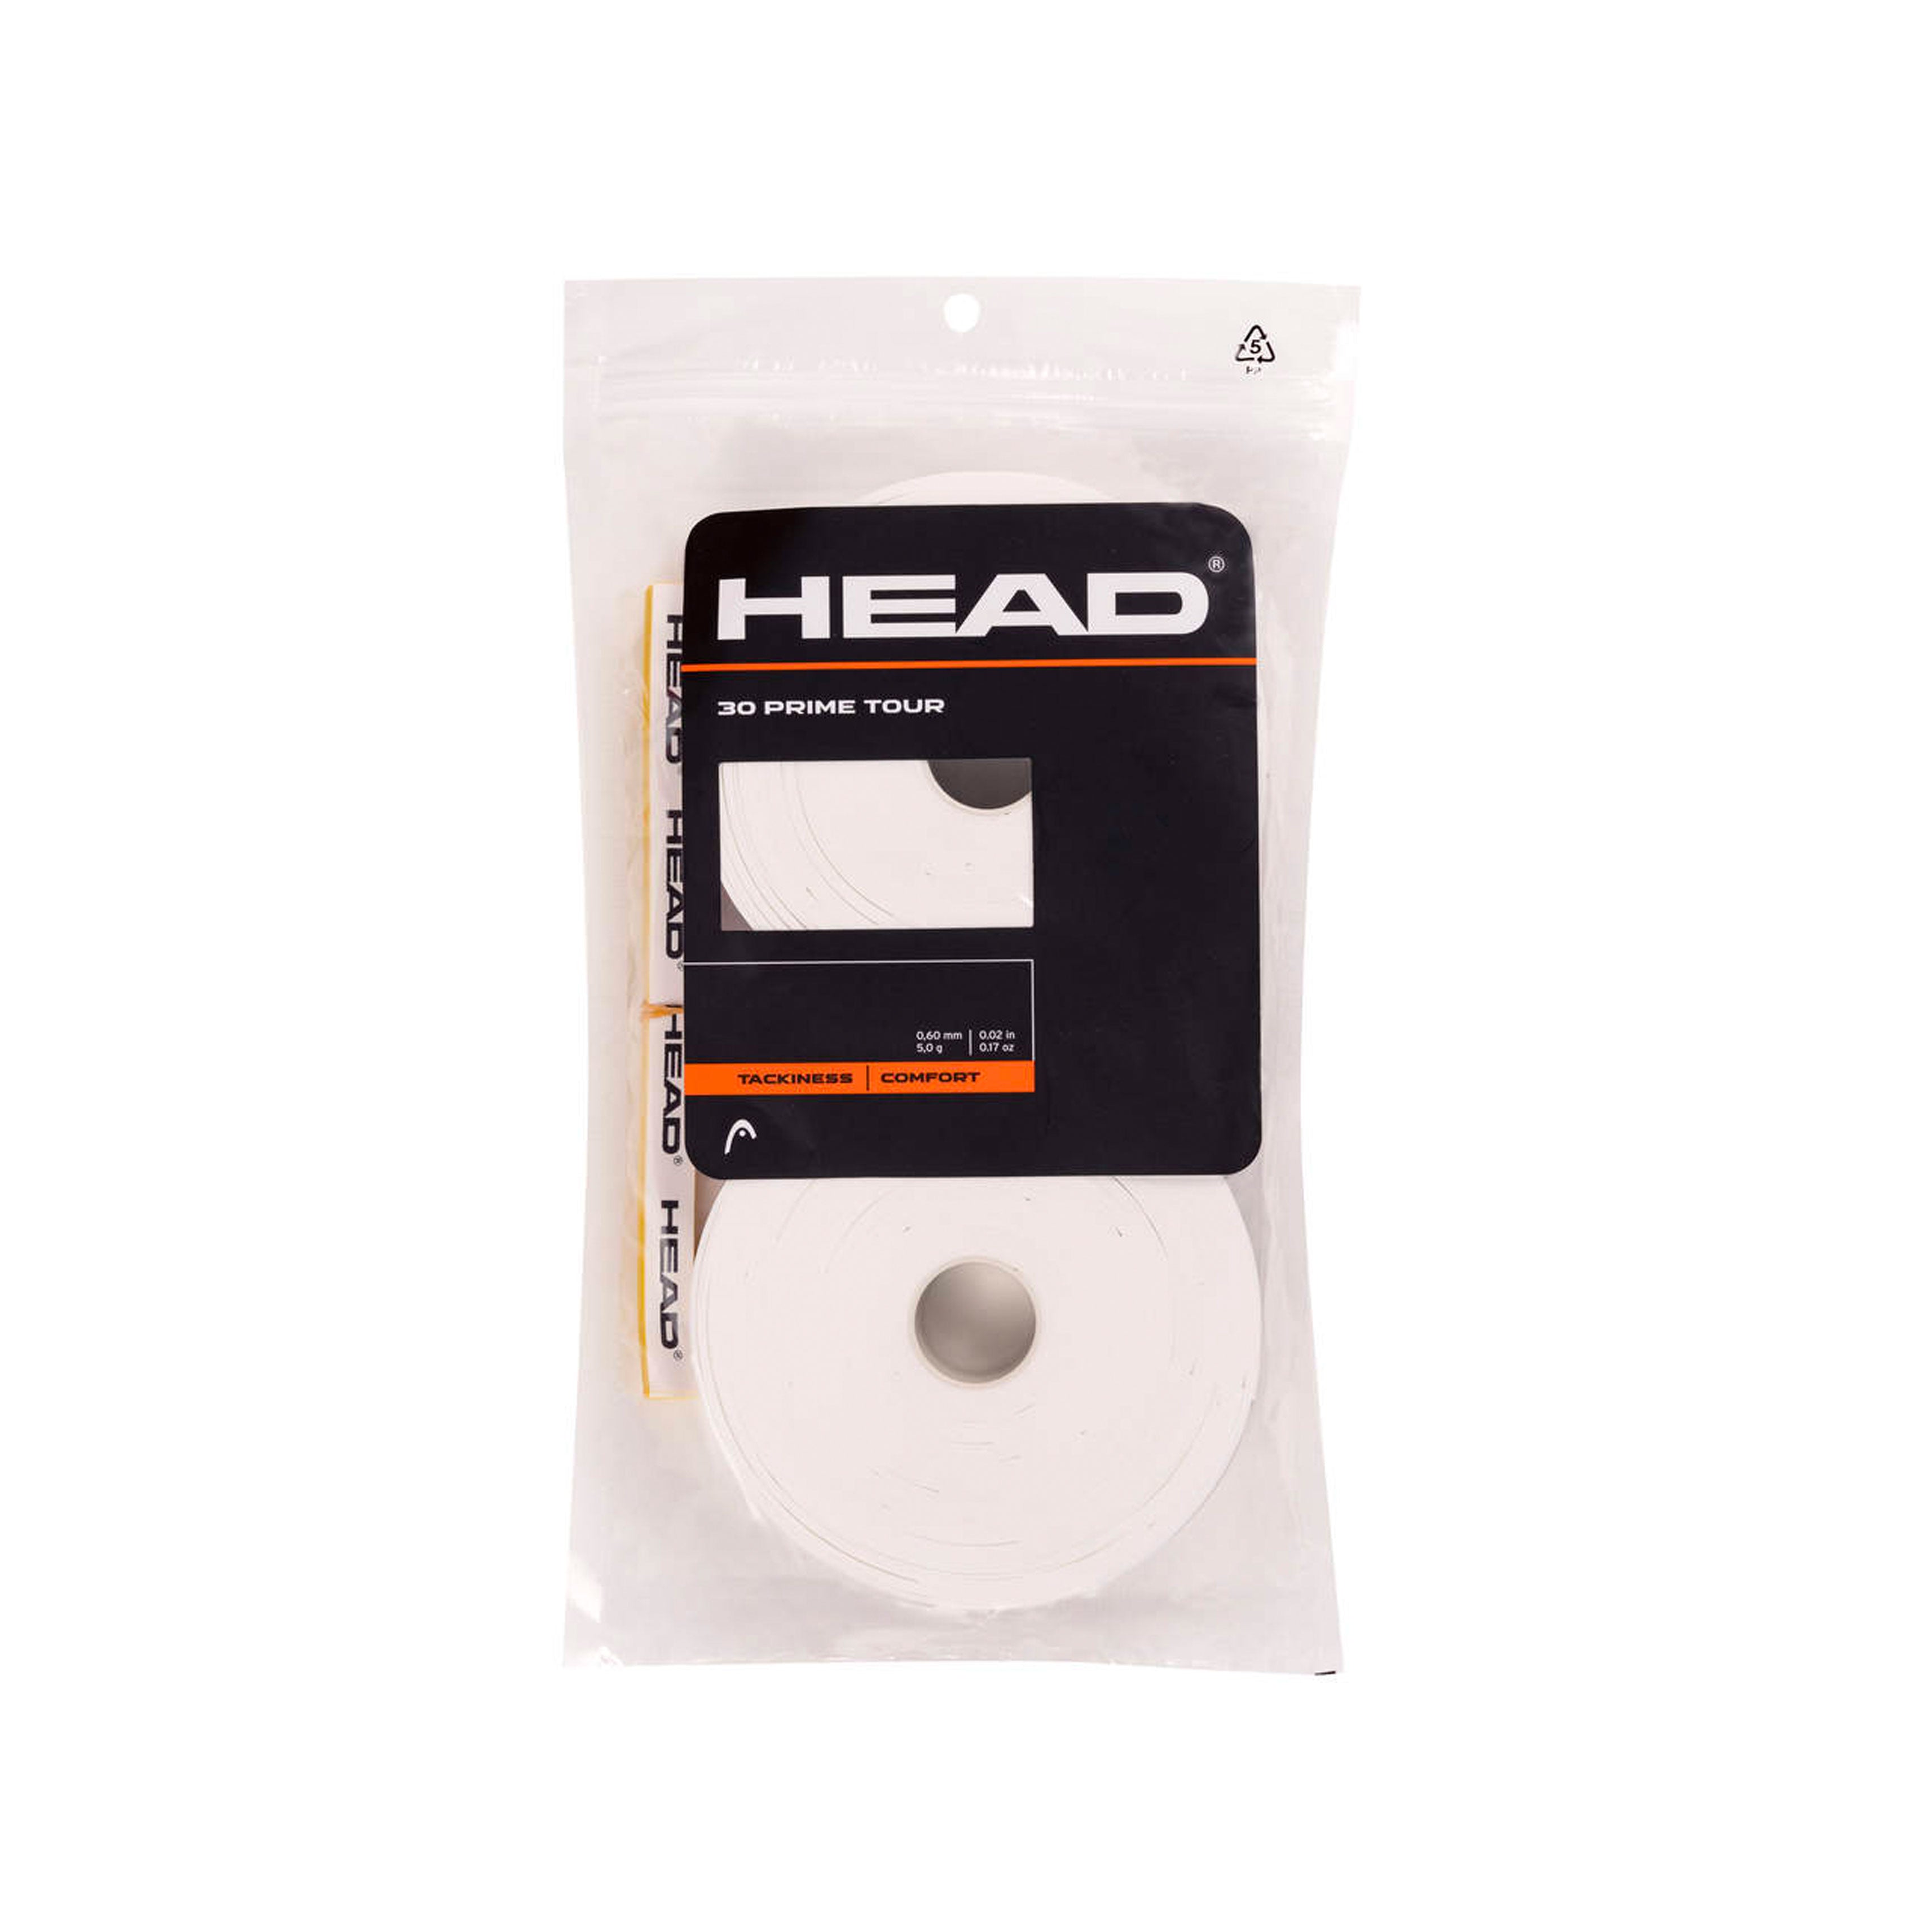 Head Prime Tour Overgrip (30-pack) - White